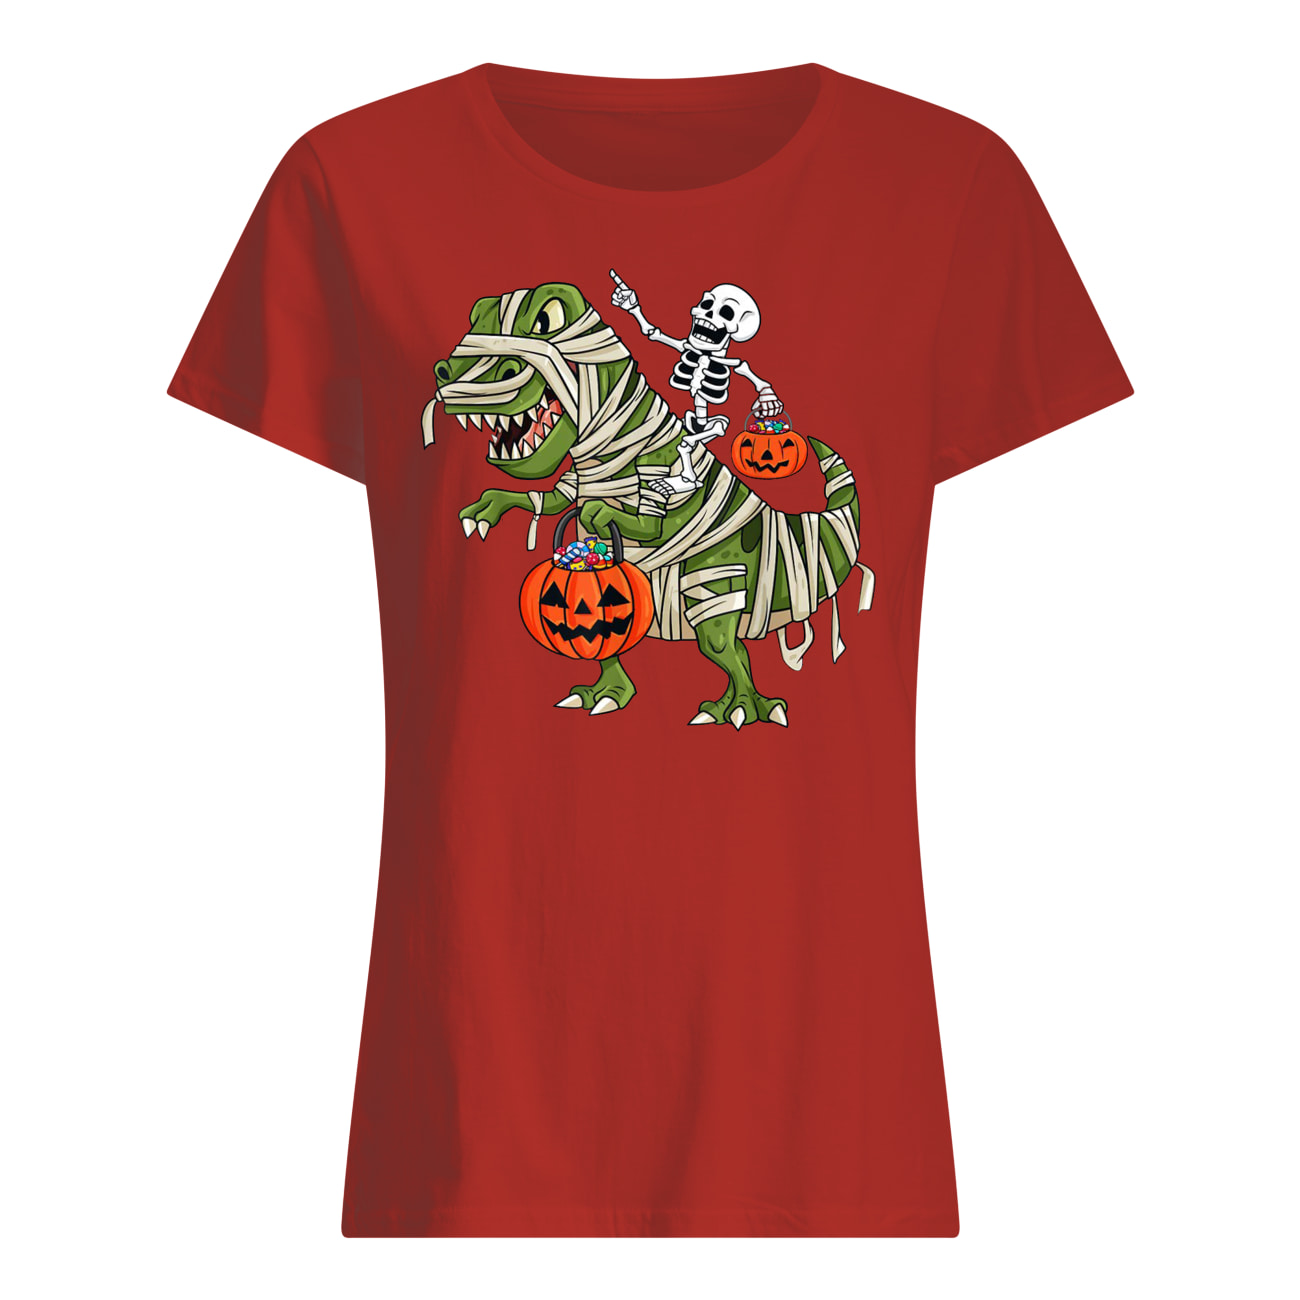 Skeleton riding t-rex halloween womens shirt